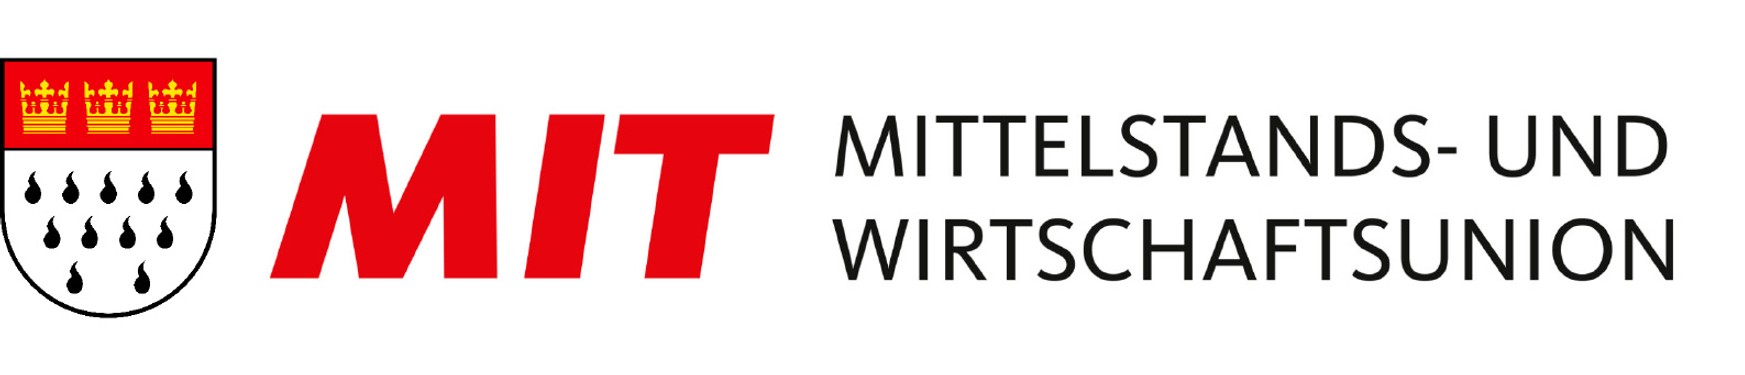 Sponsoring_ WvM_Immobilien_MIT-Koeln.jpg
				